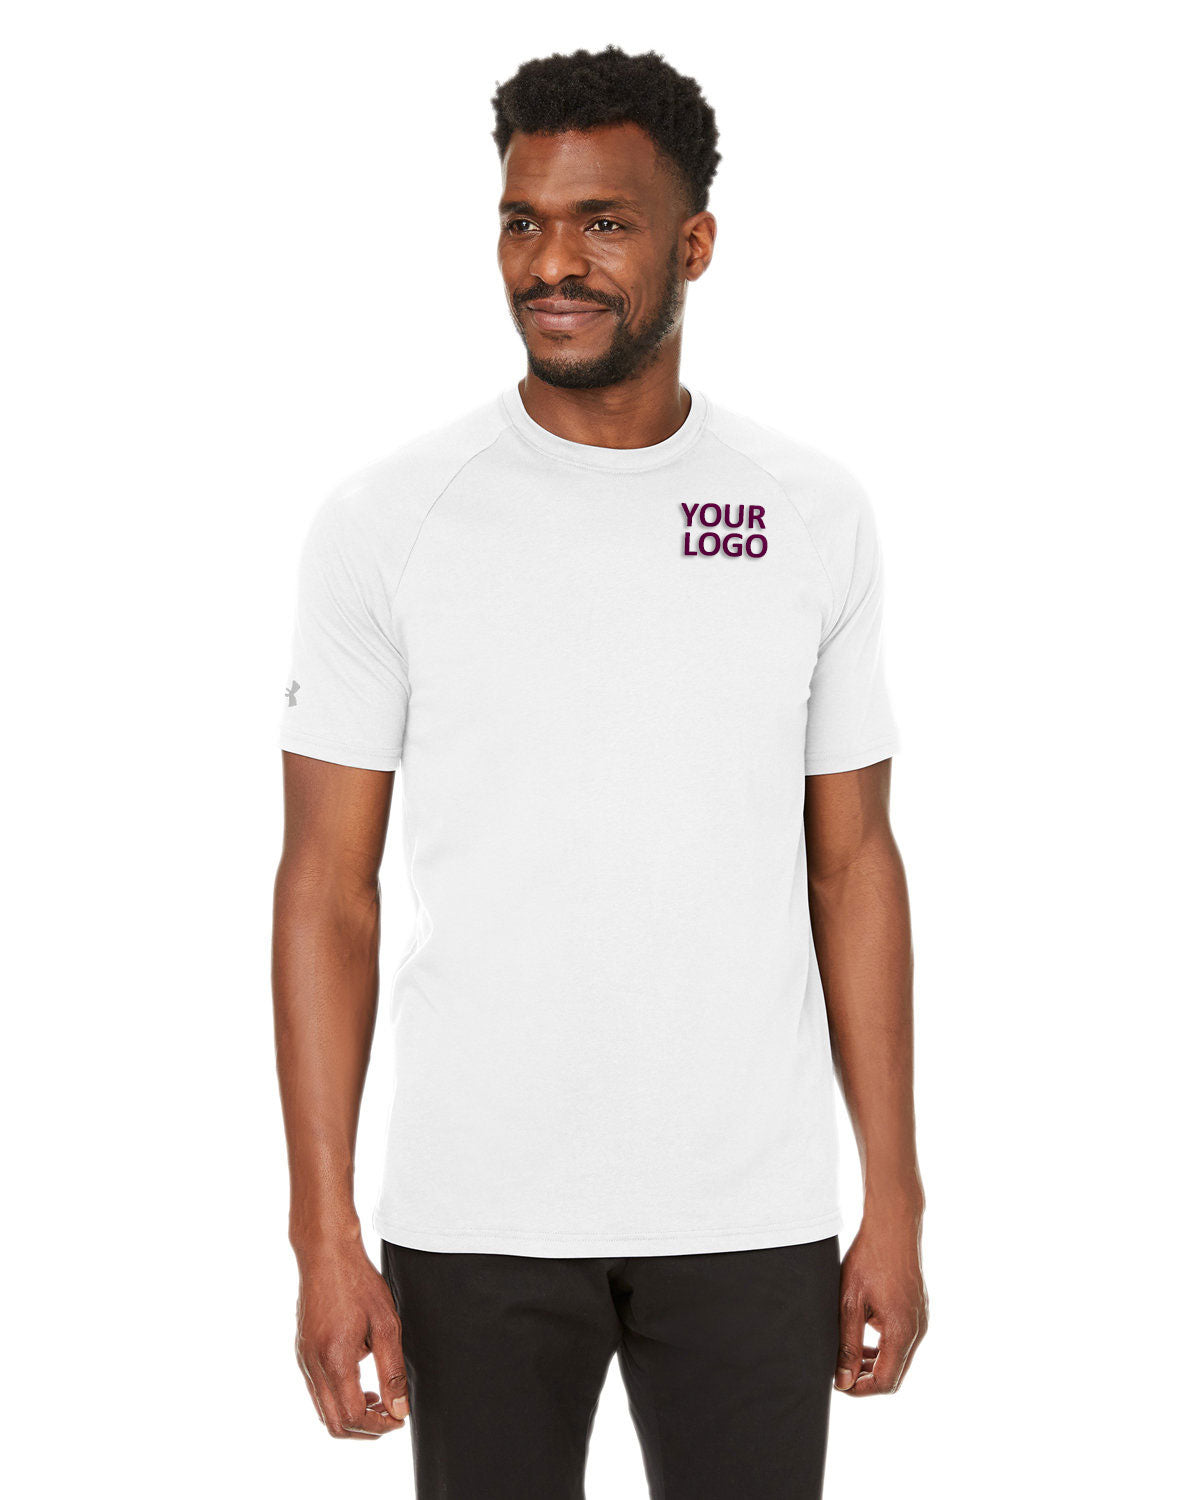 Men's Black Nike T-Shirts: 300+ Items in Stock